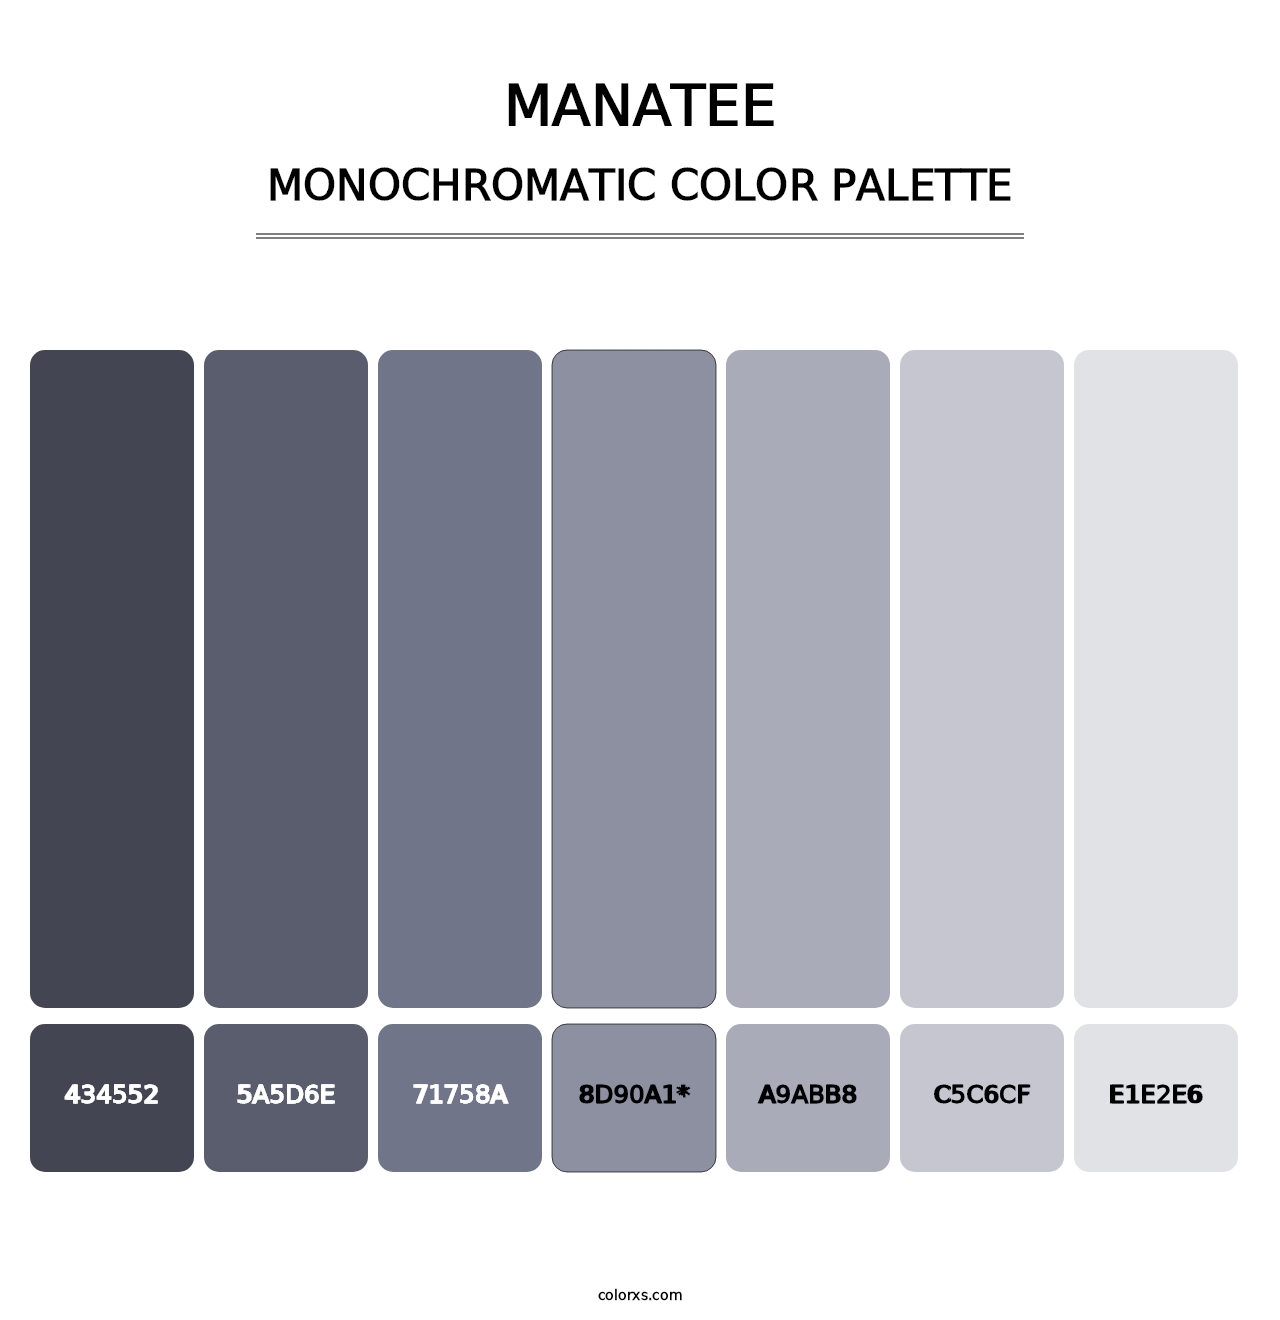 Manatee - Monochromatic Color Palette